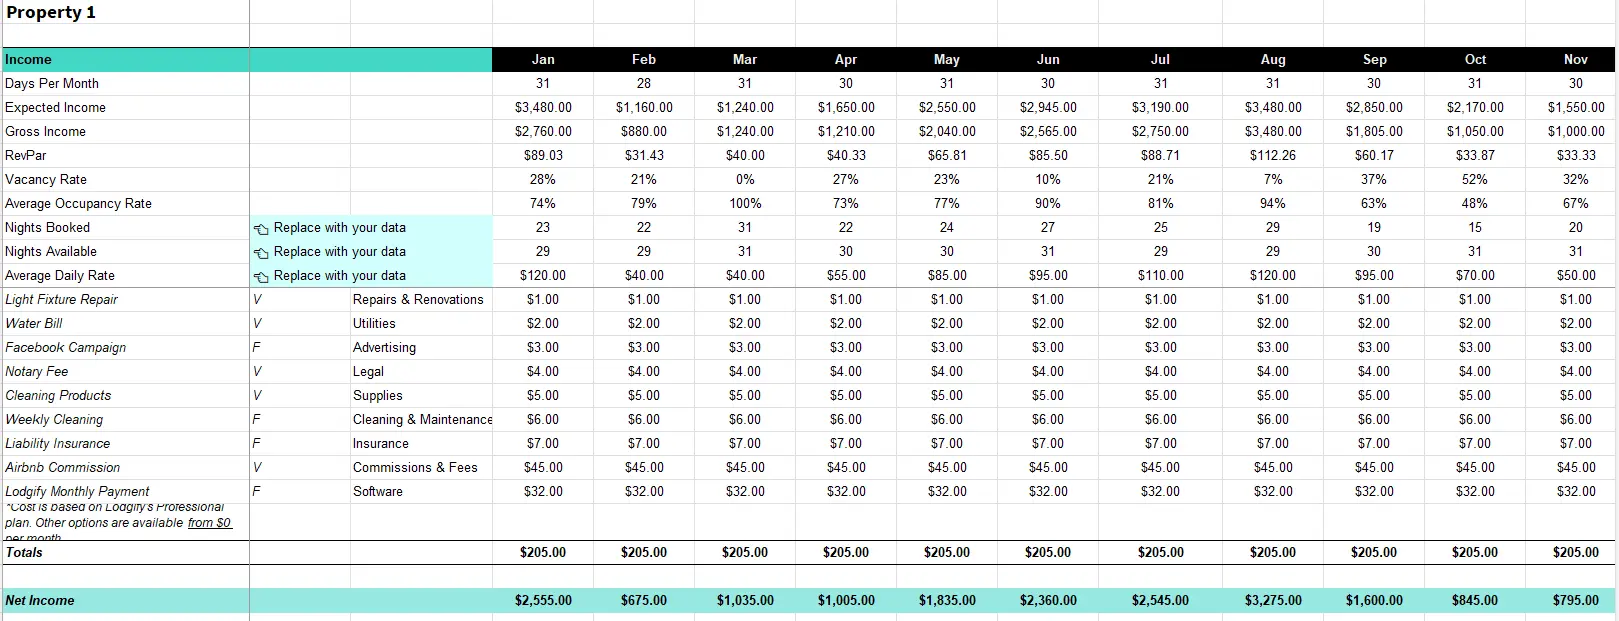 Short-term rental expense spreadsheet by Lodgify